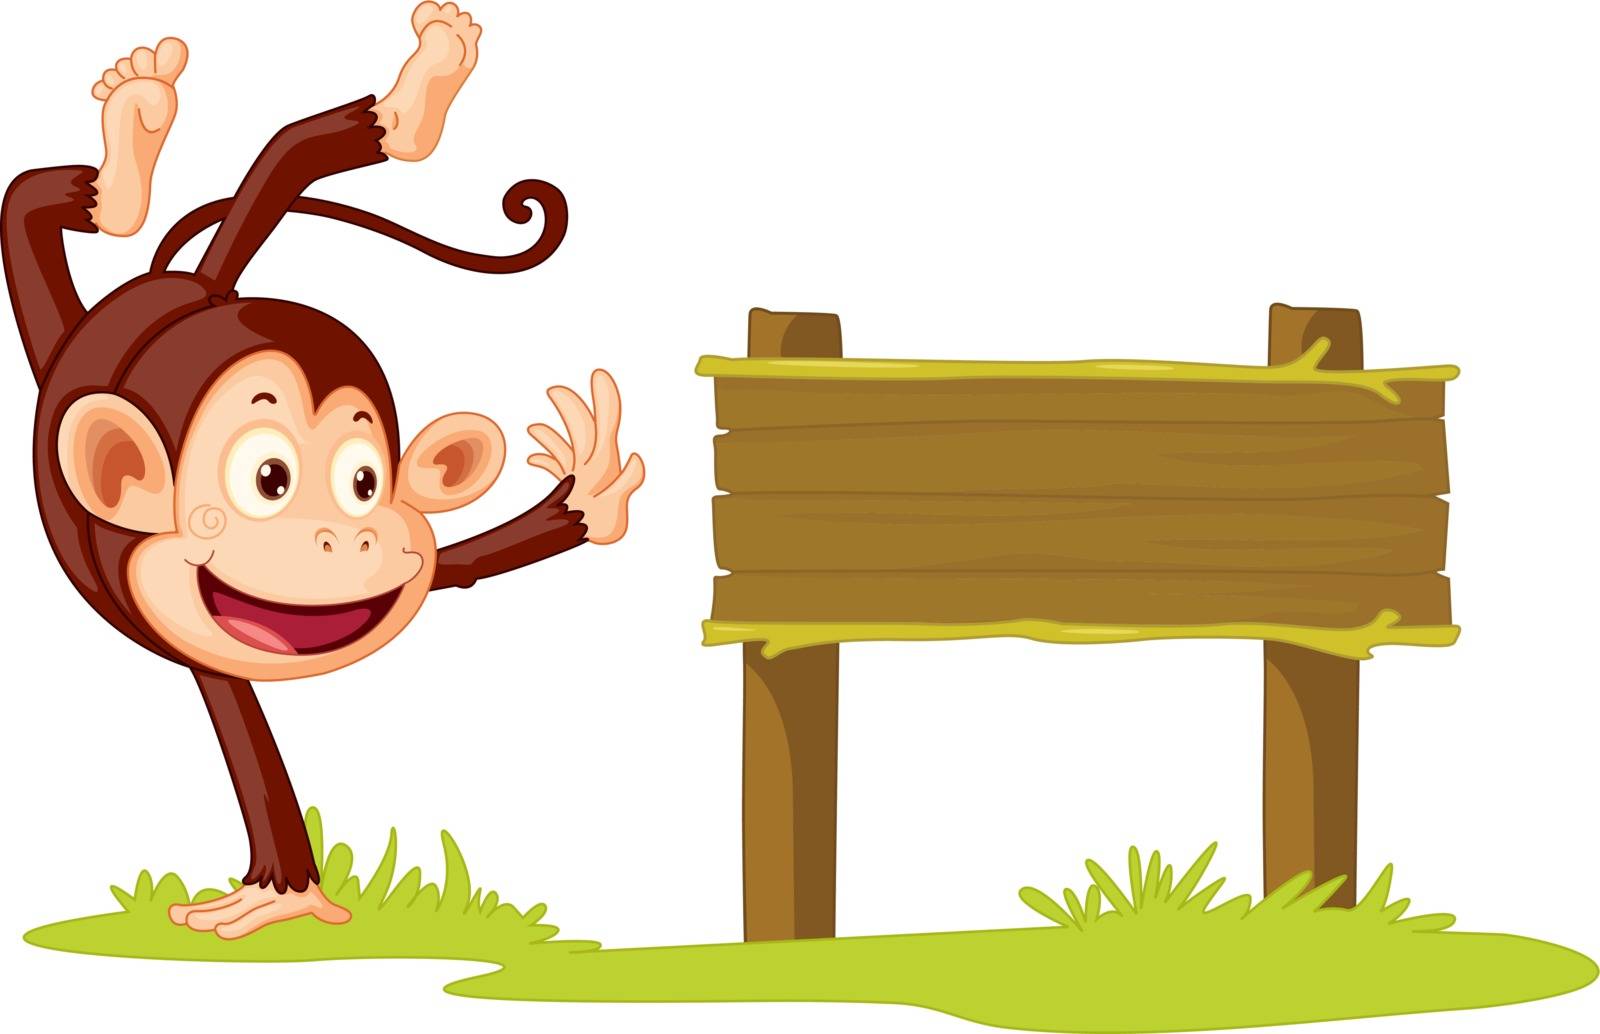 Illustration of a monkey on a sign